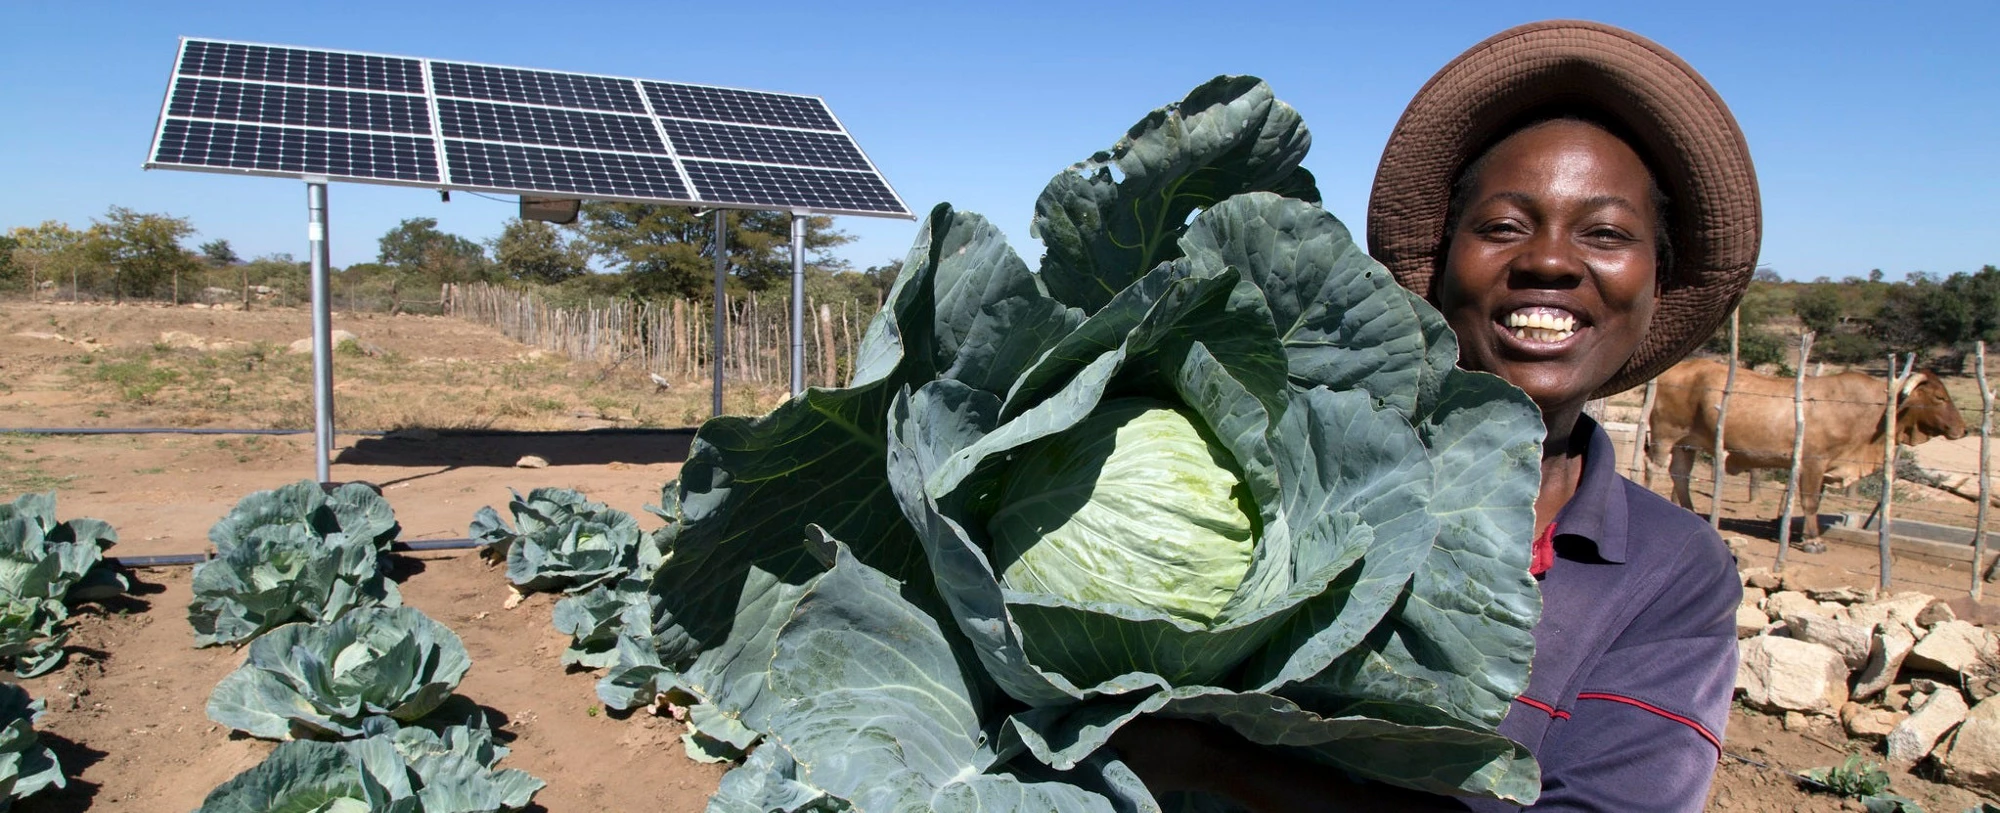 Solar powered irrigation in Zimbabwe. Photo by David Brazier